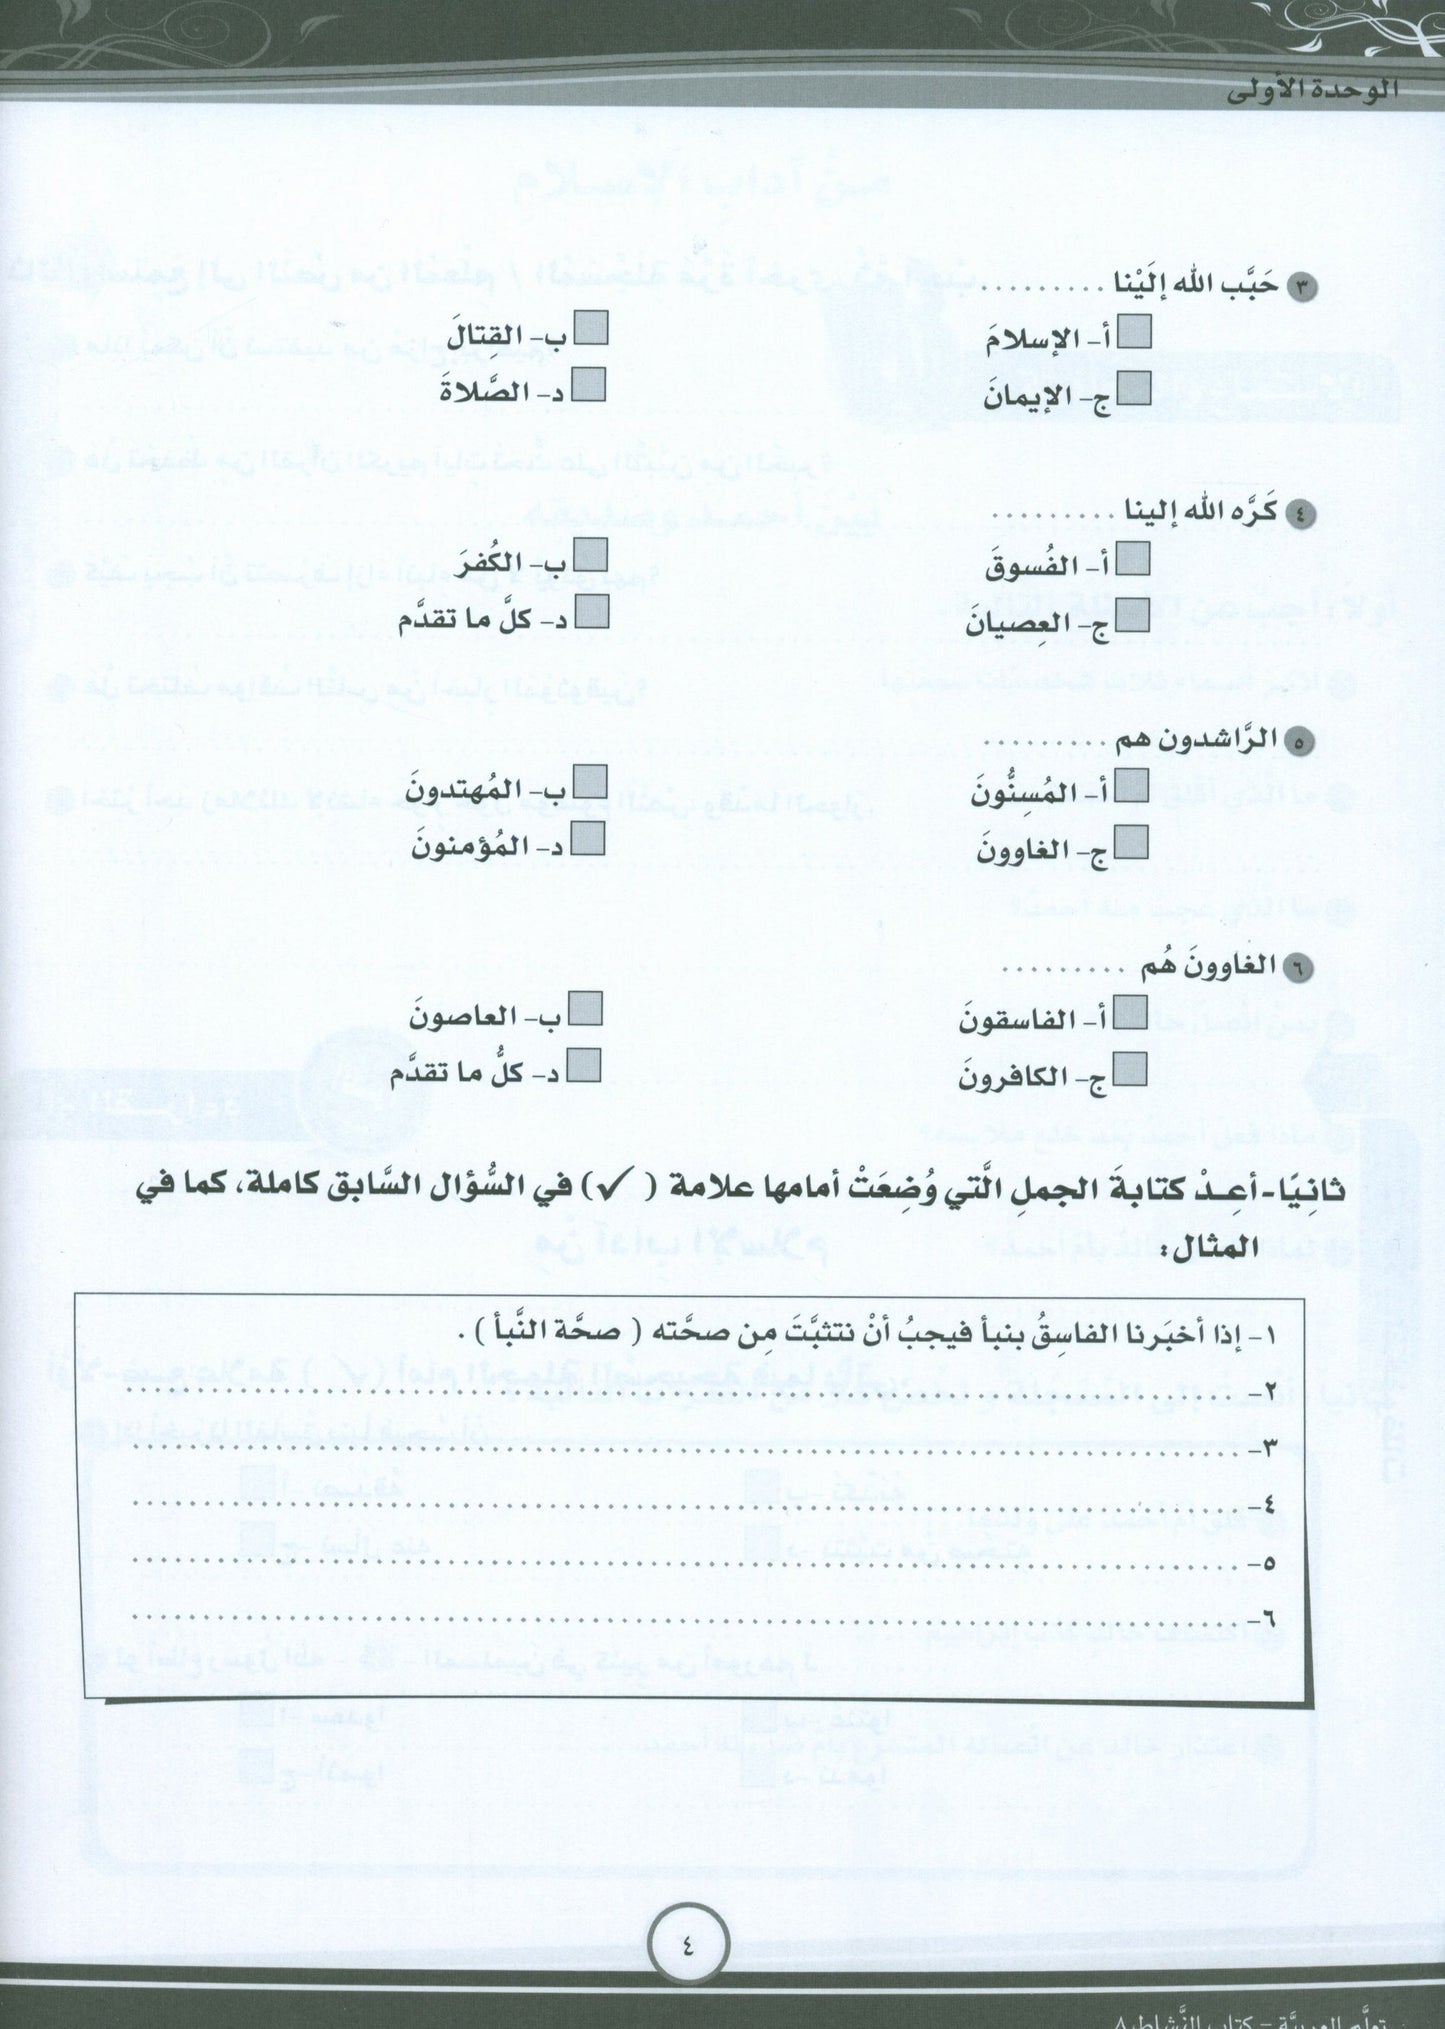 ICO Learn Arabic - Workbook - Level 8 Part 1 - تعلم العربية كتاب النشاط